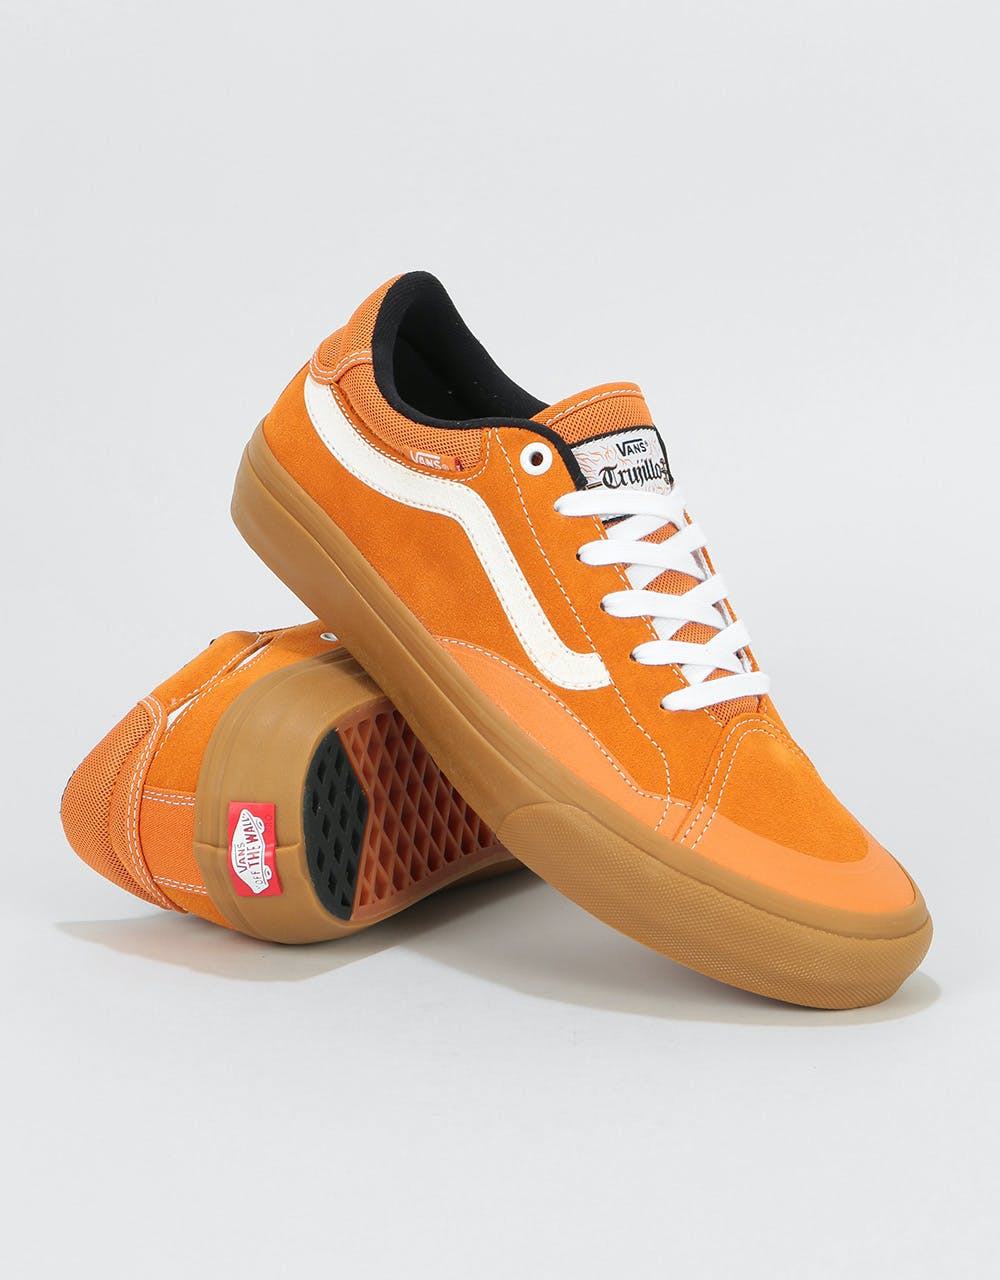 Vans TNT Advanced Prototype Skate Shoes - (Gum) Golden Oak/True White